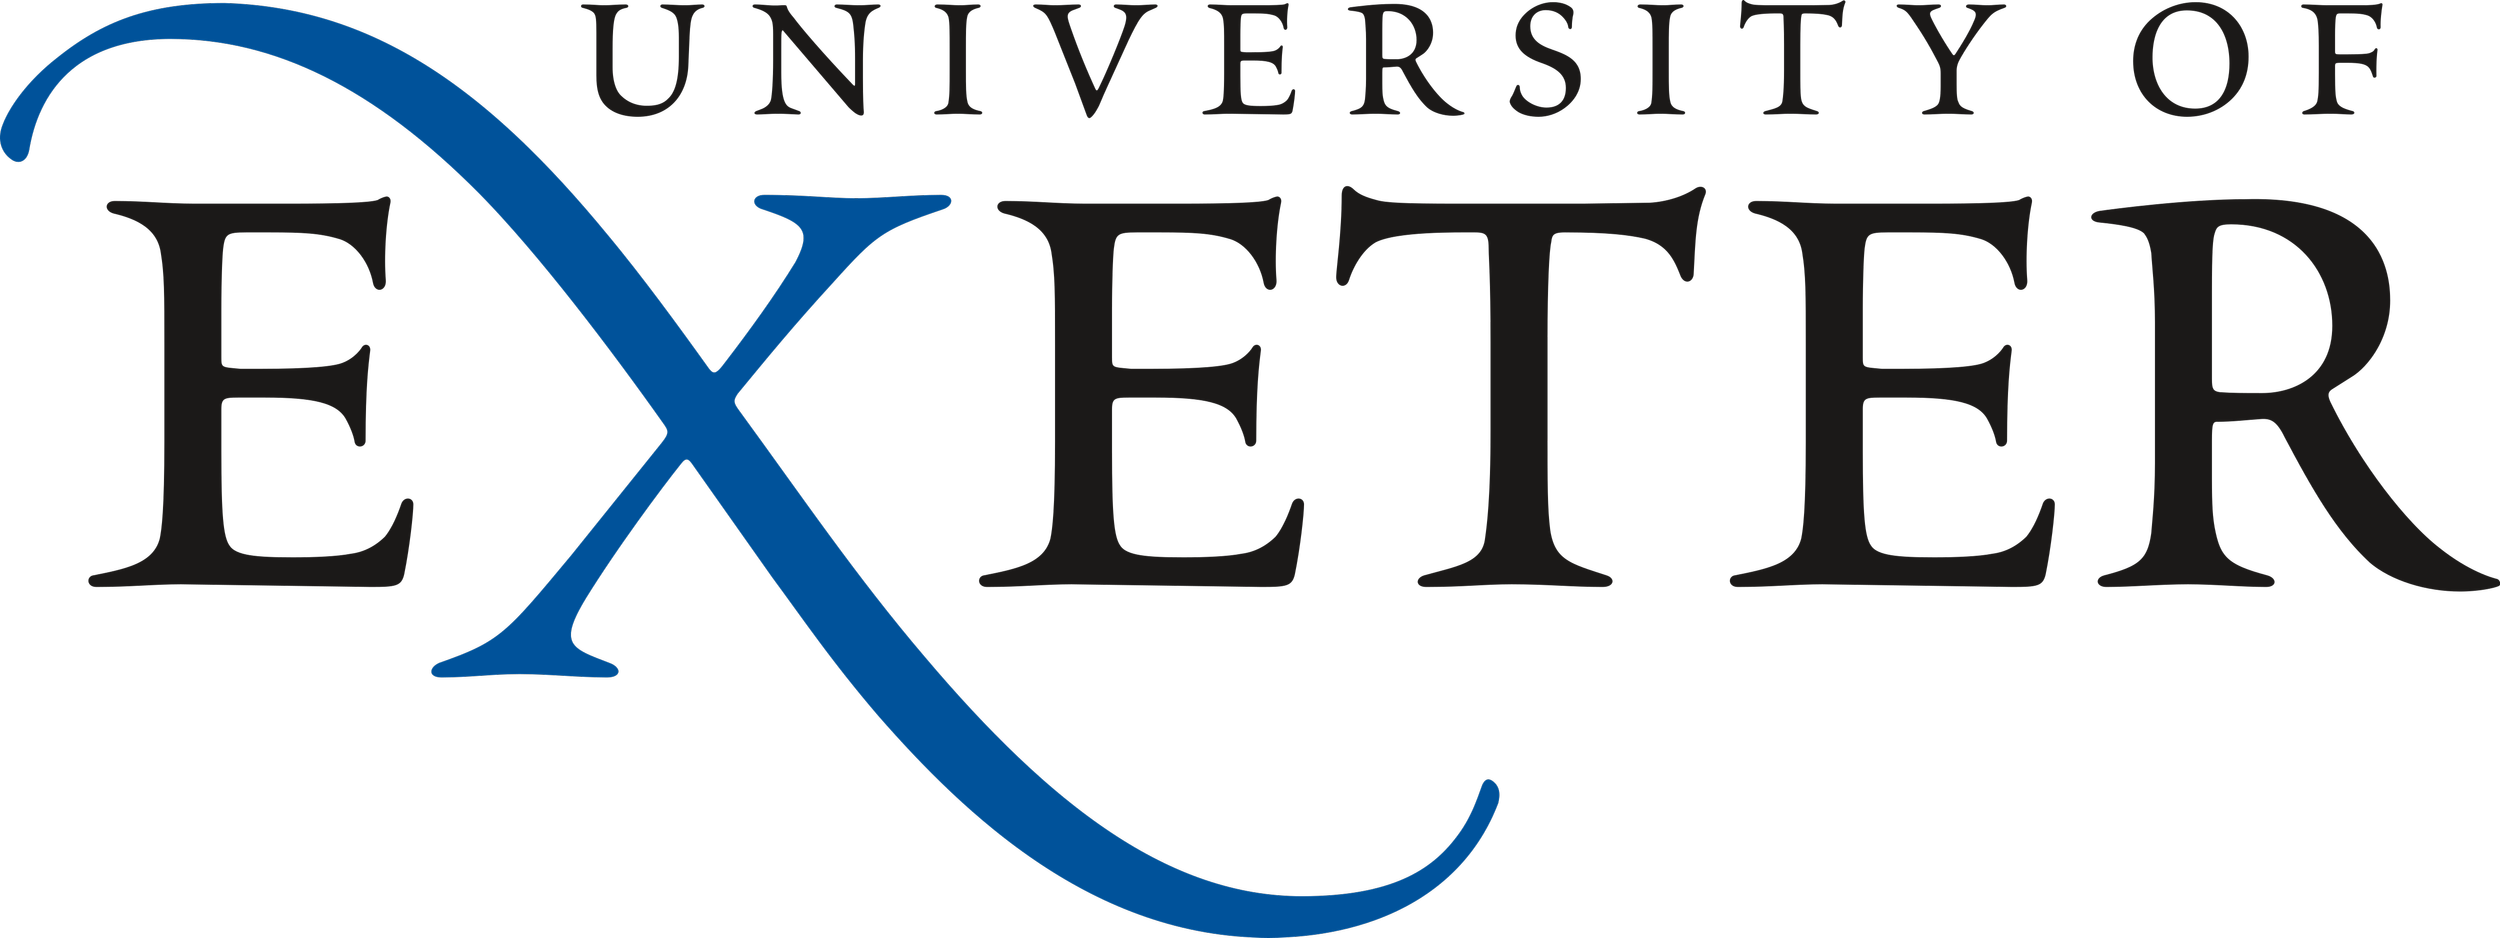 University_of_Exeter_Logo.png